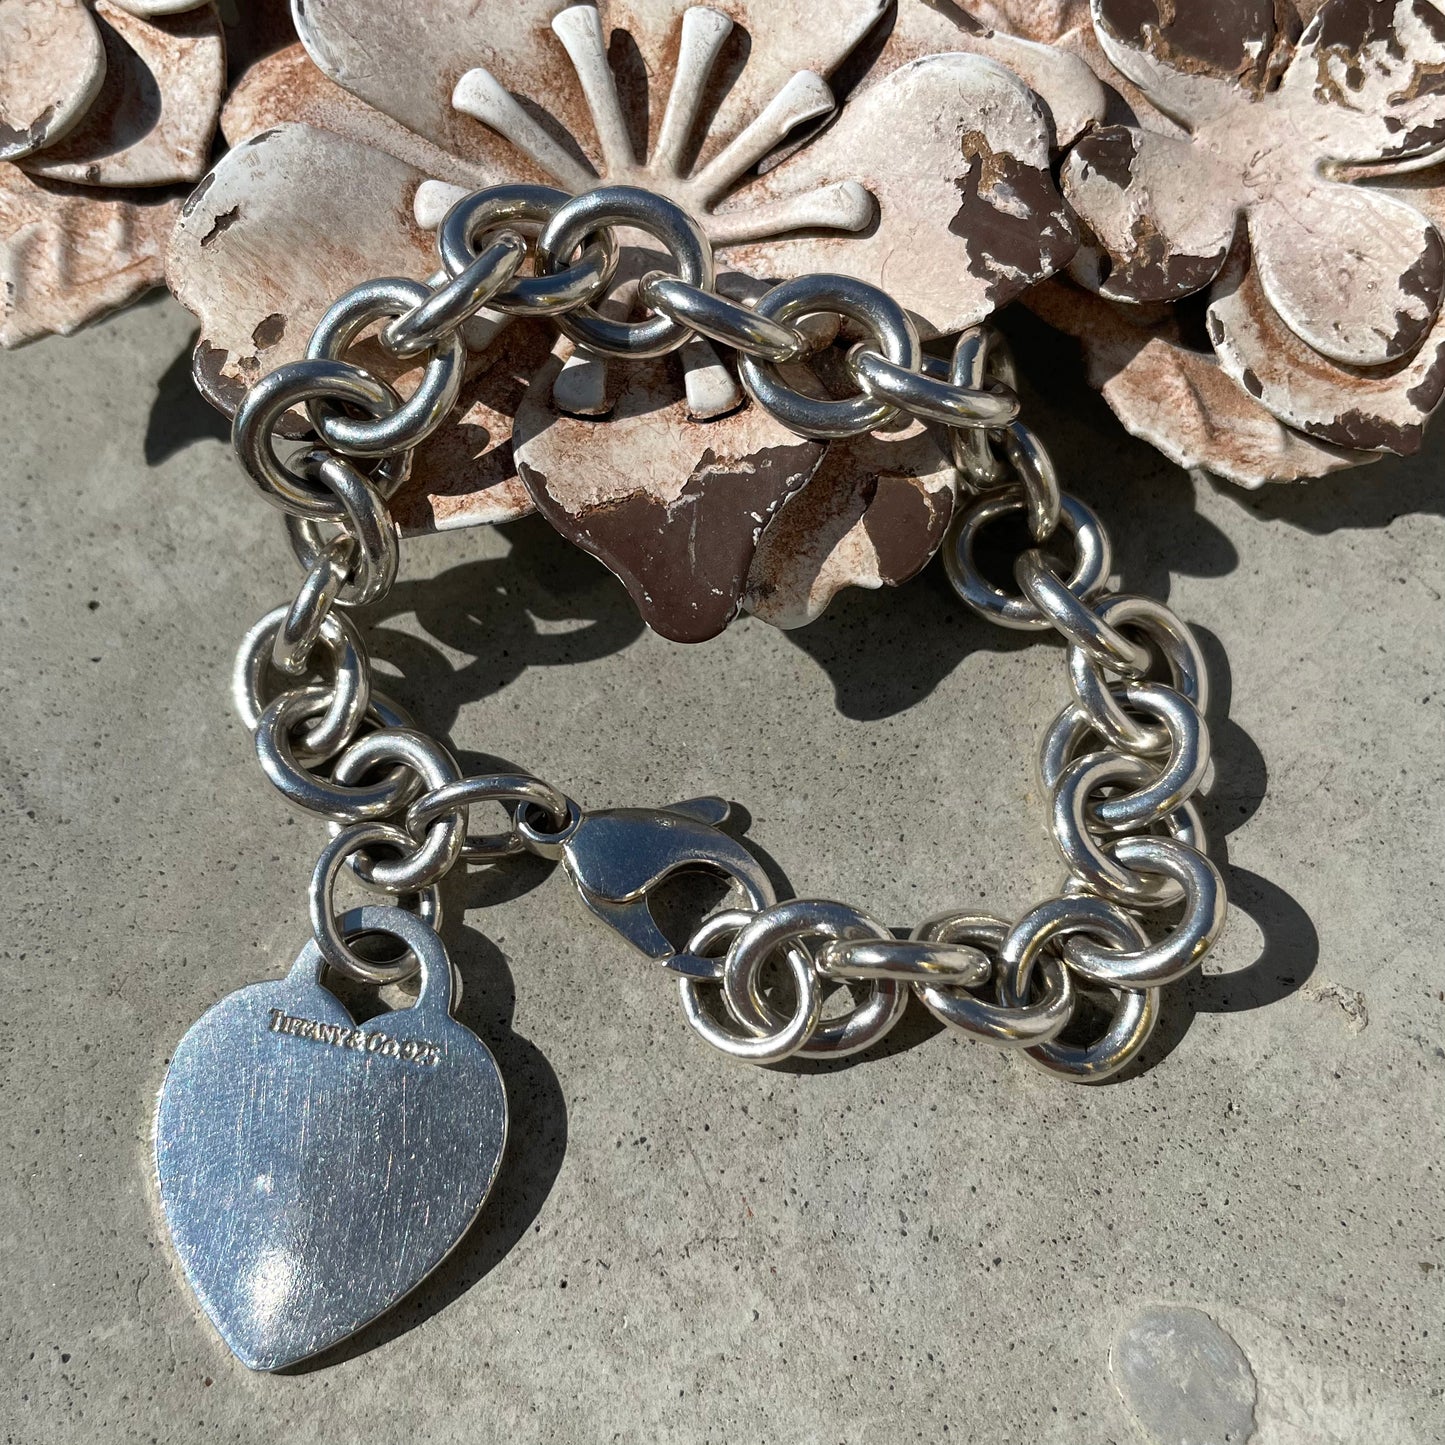 Tiffany & Co Heart Charm Bracelet